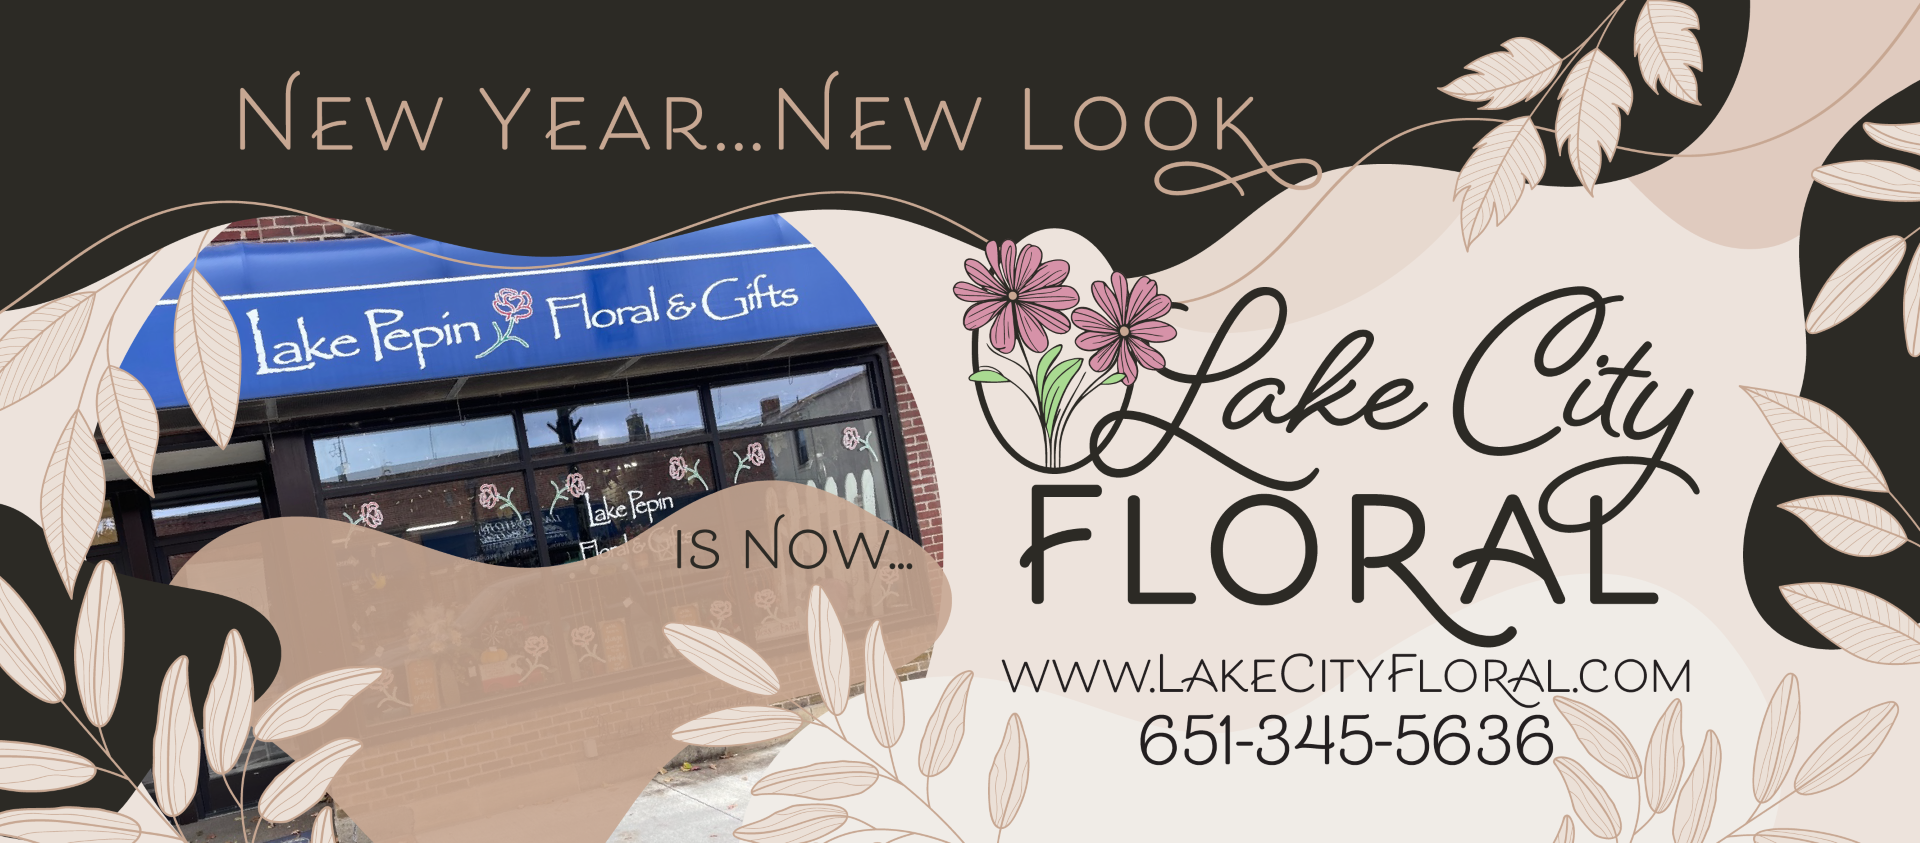 Lake Pepin Floral & Gifts 110 S Lakeshore Dr, Lake City Minnesota 55041